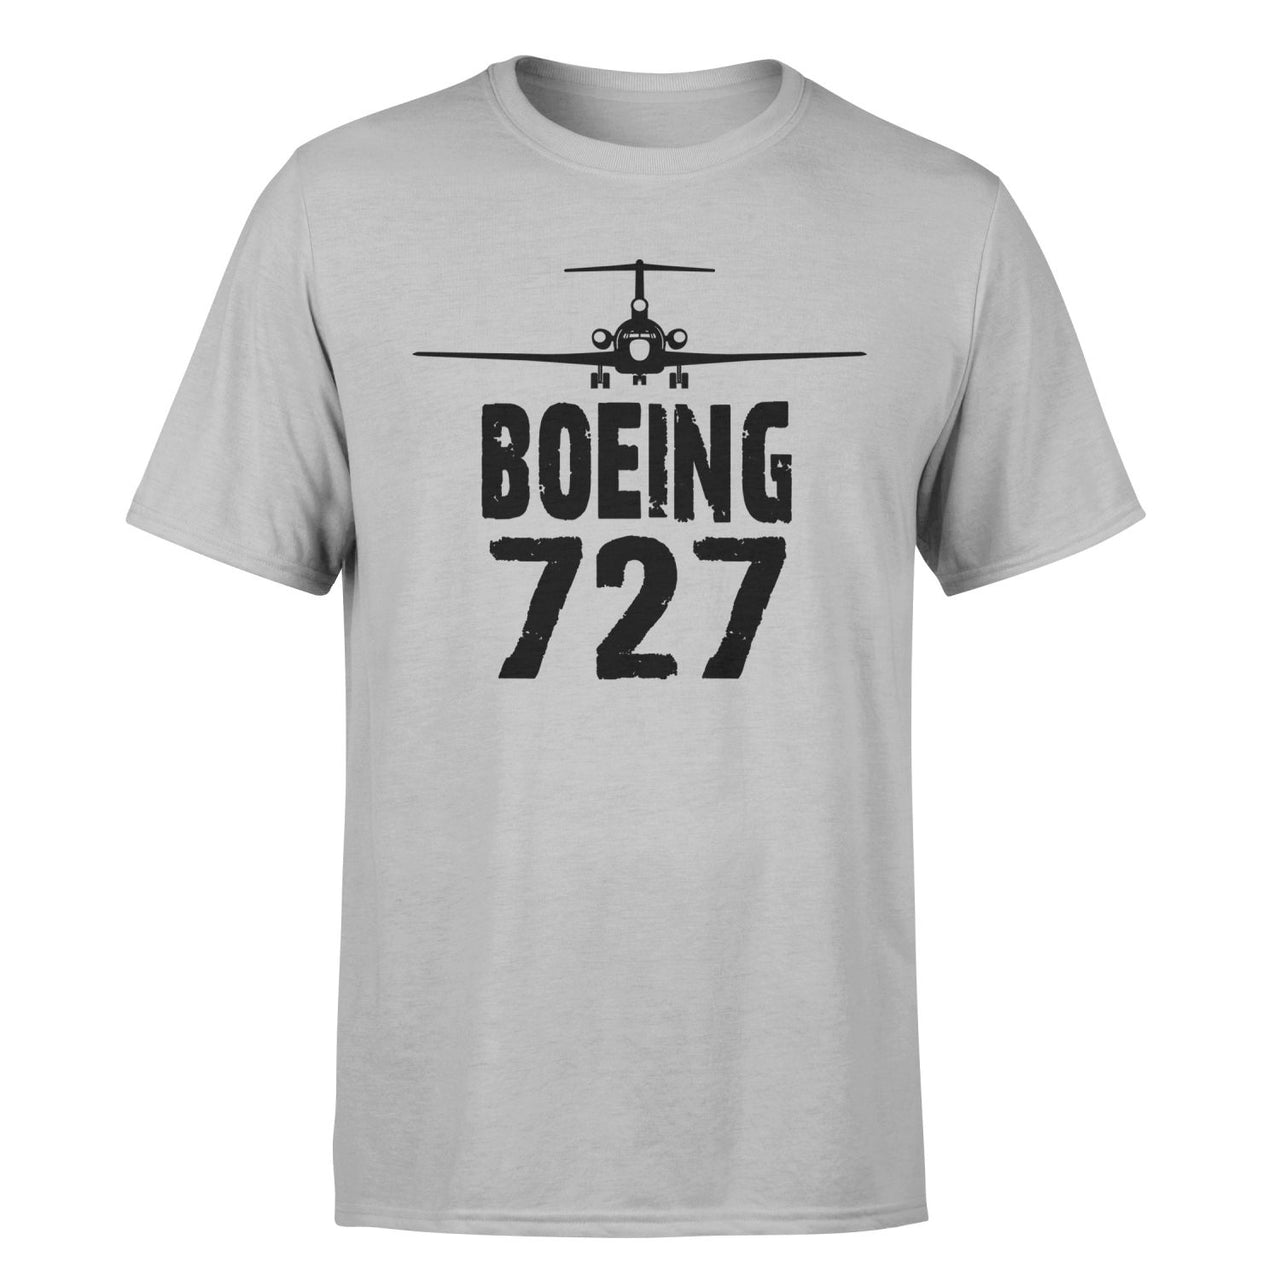 Boeing 727 & Plane Designed T-Shirts